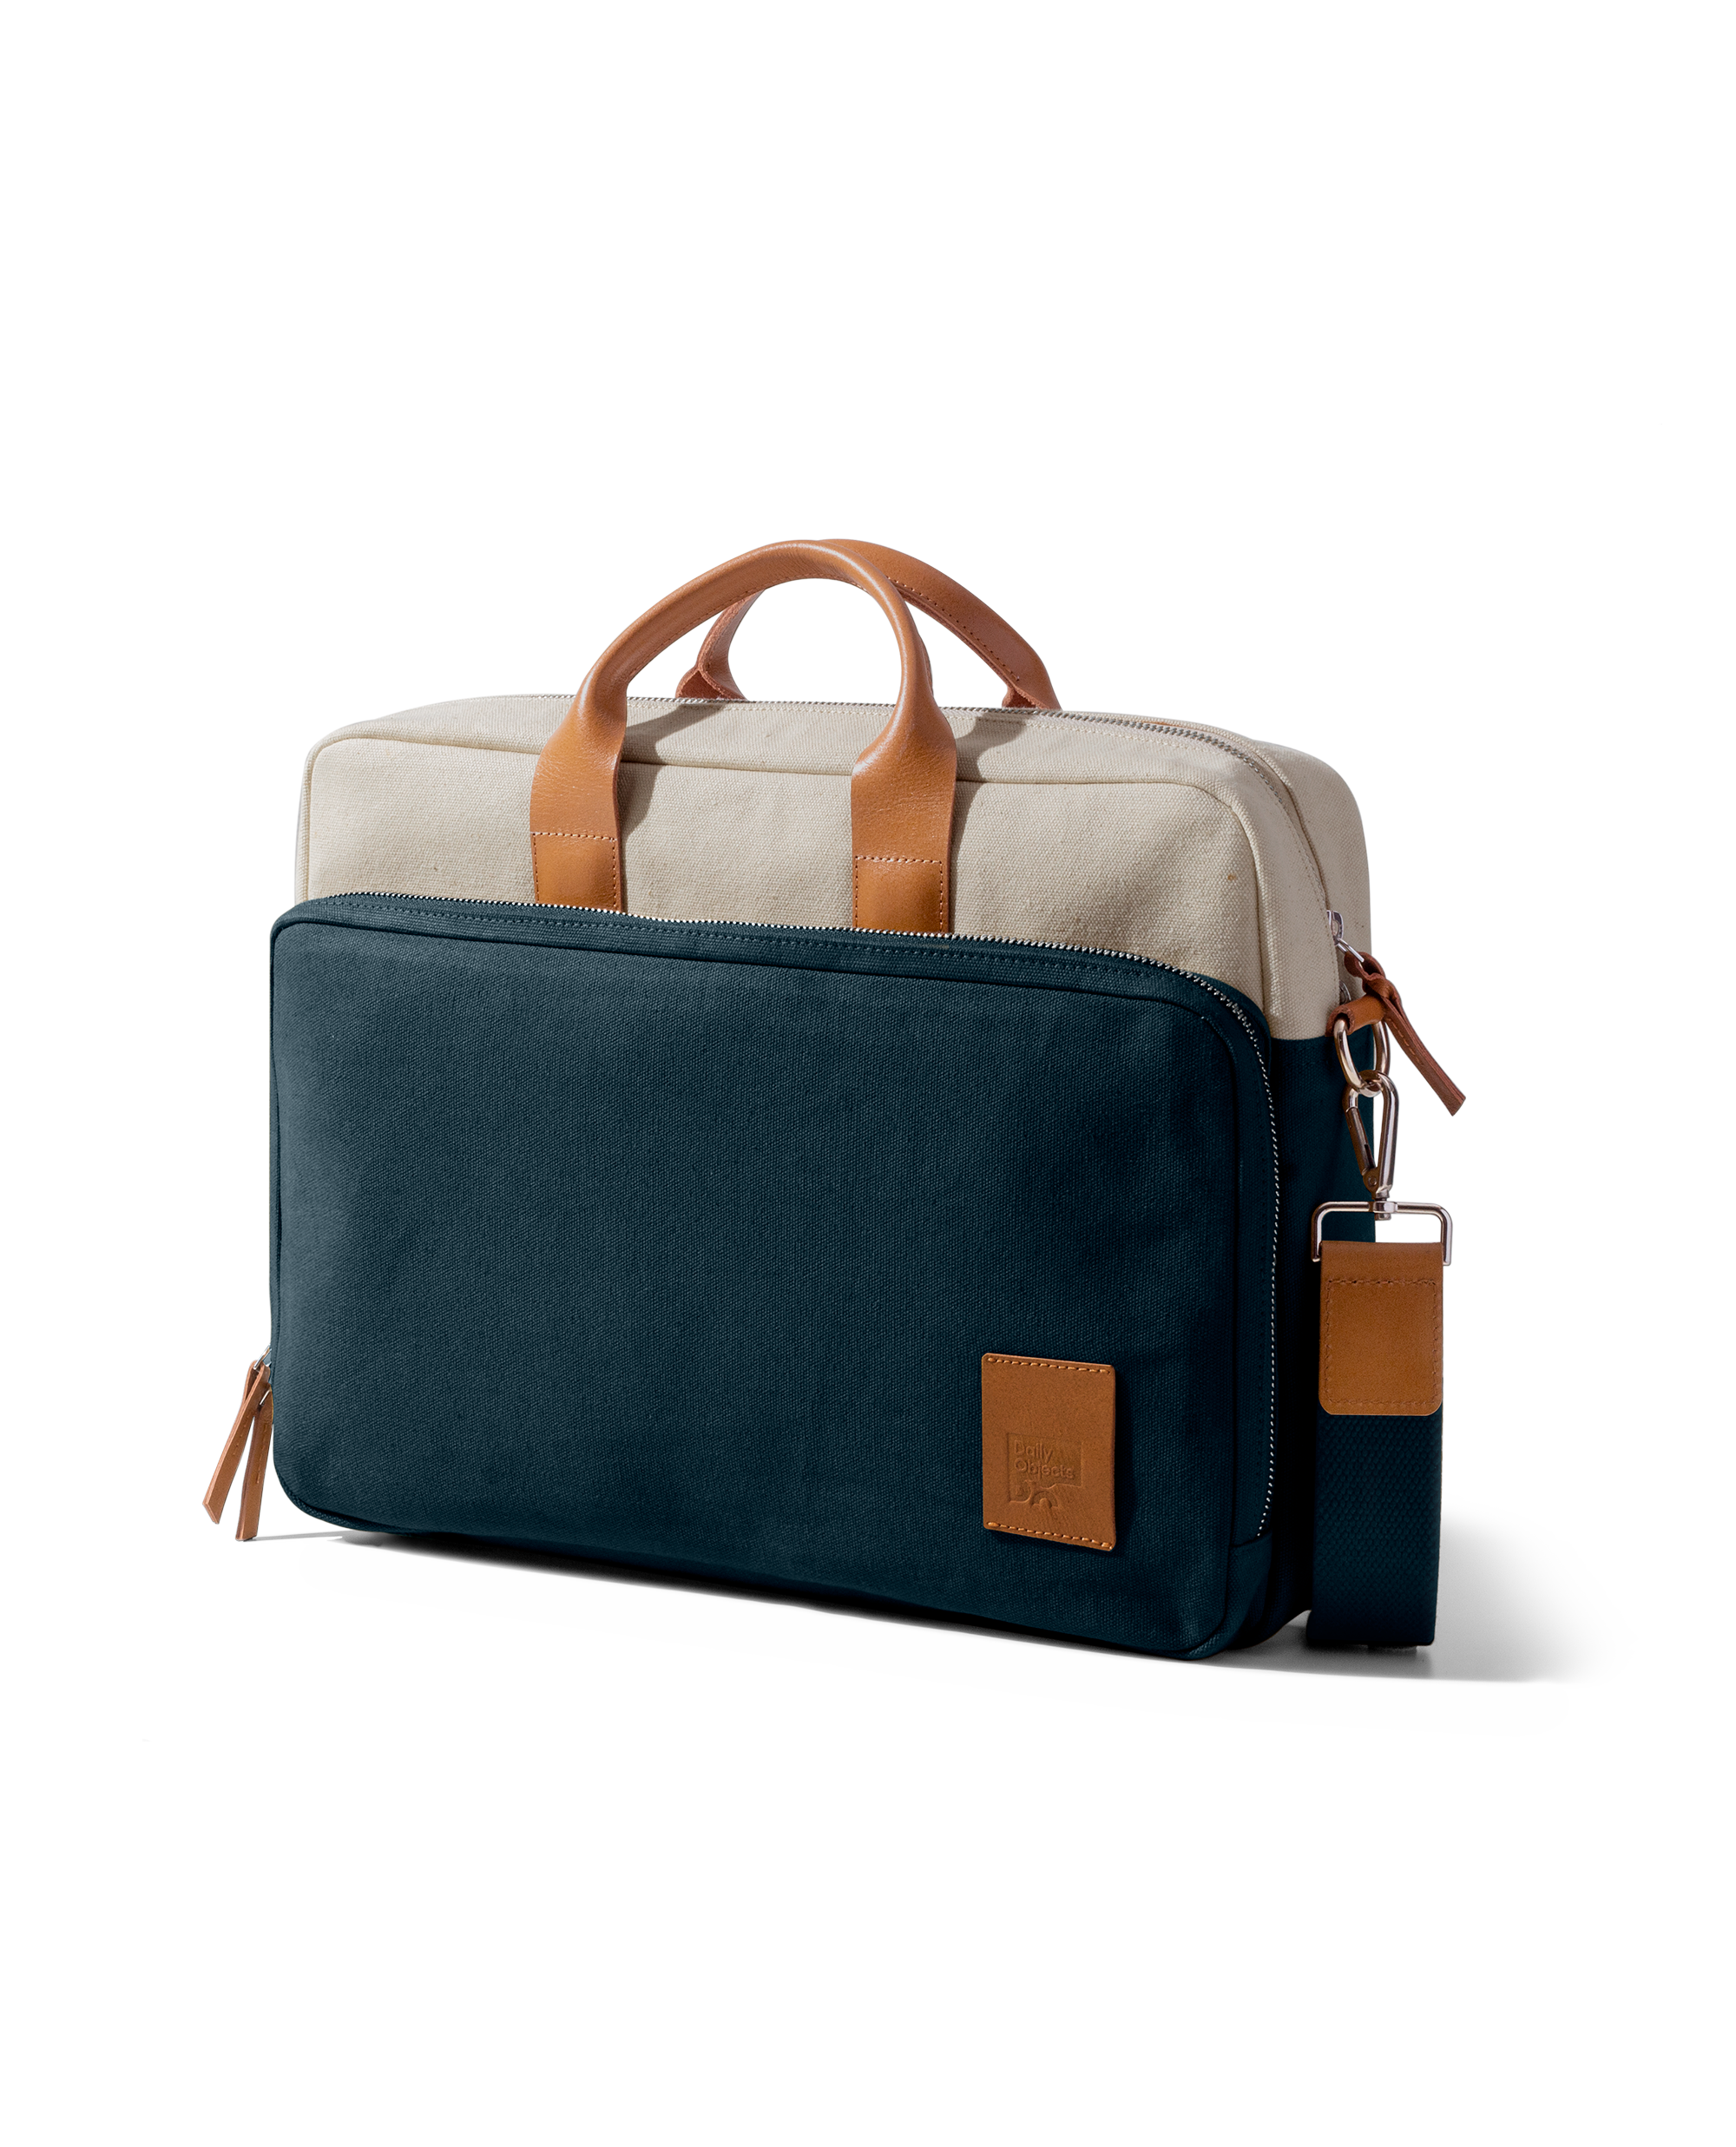 LEADERACHI Genuine Hunter Leather Women's Laptop Briefcase Bag.